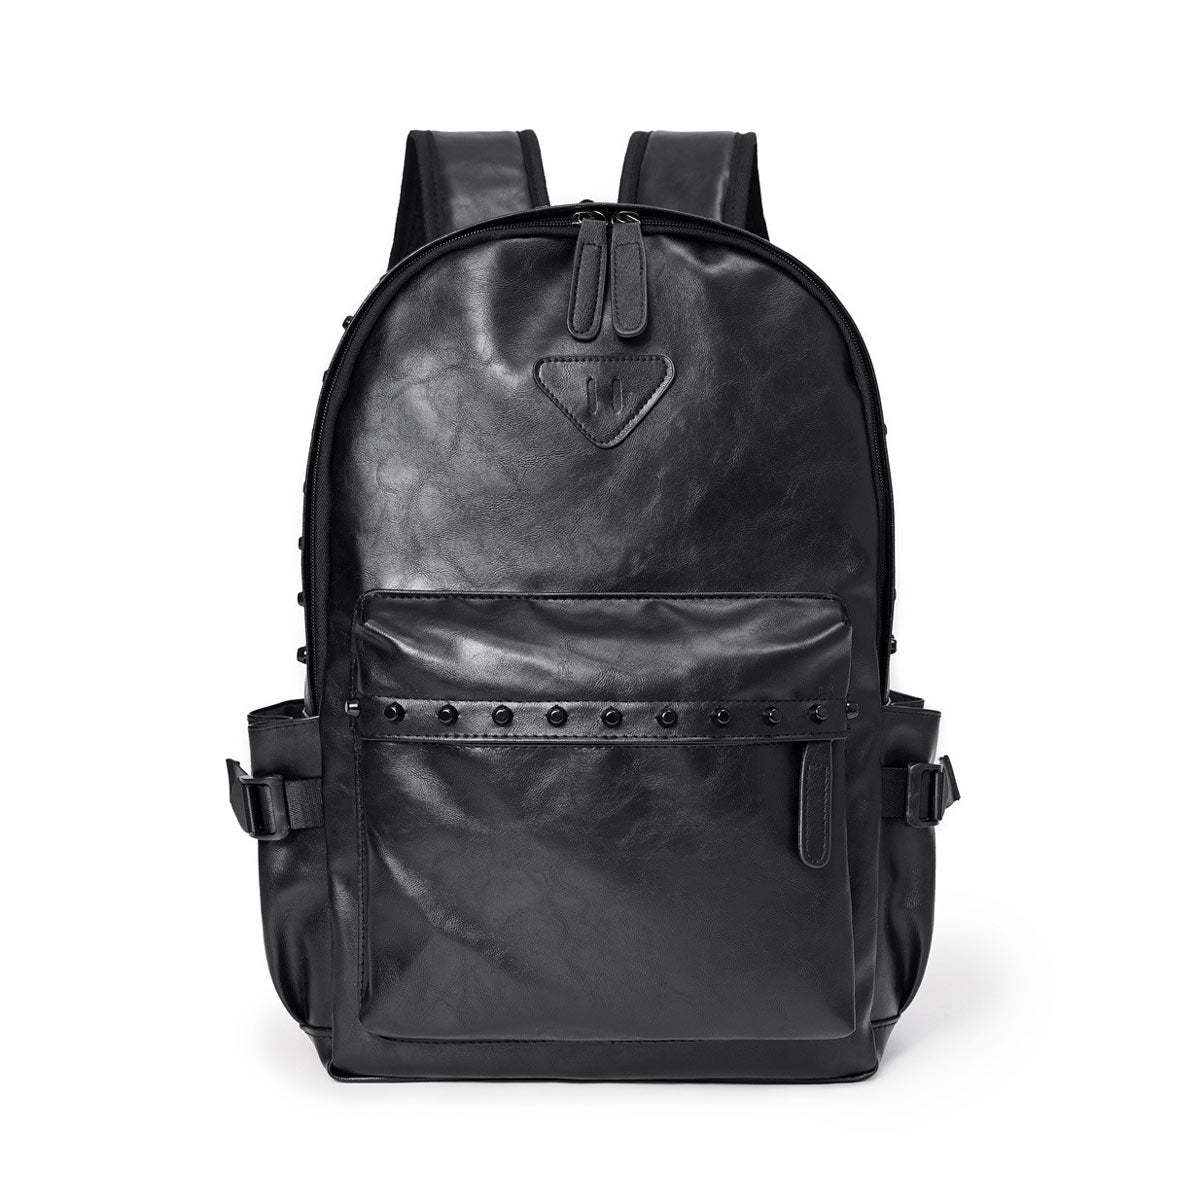 Black Waterproof PU Leather Laptop Backpack - Punk Style Accessory